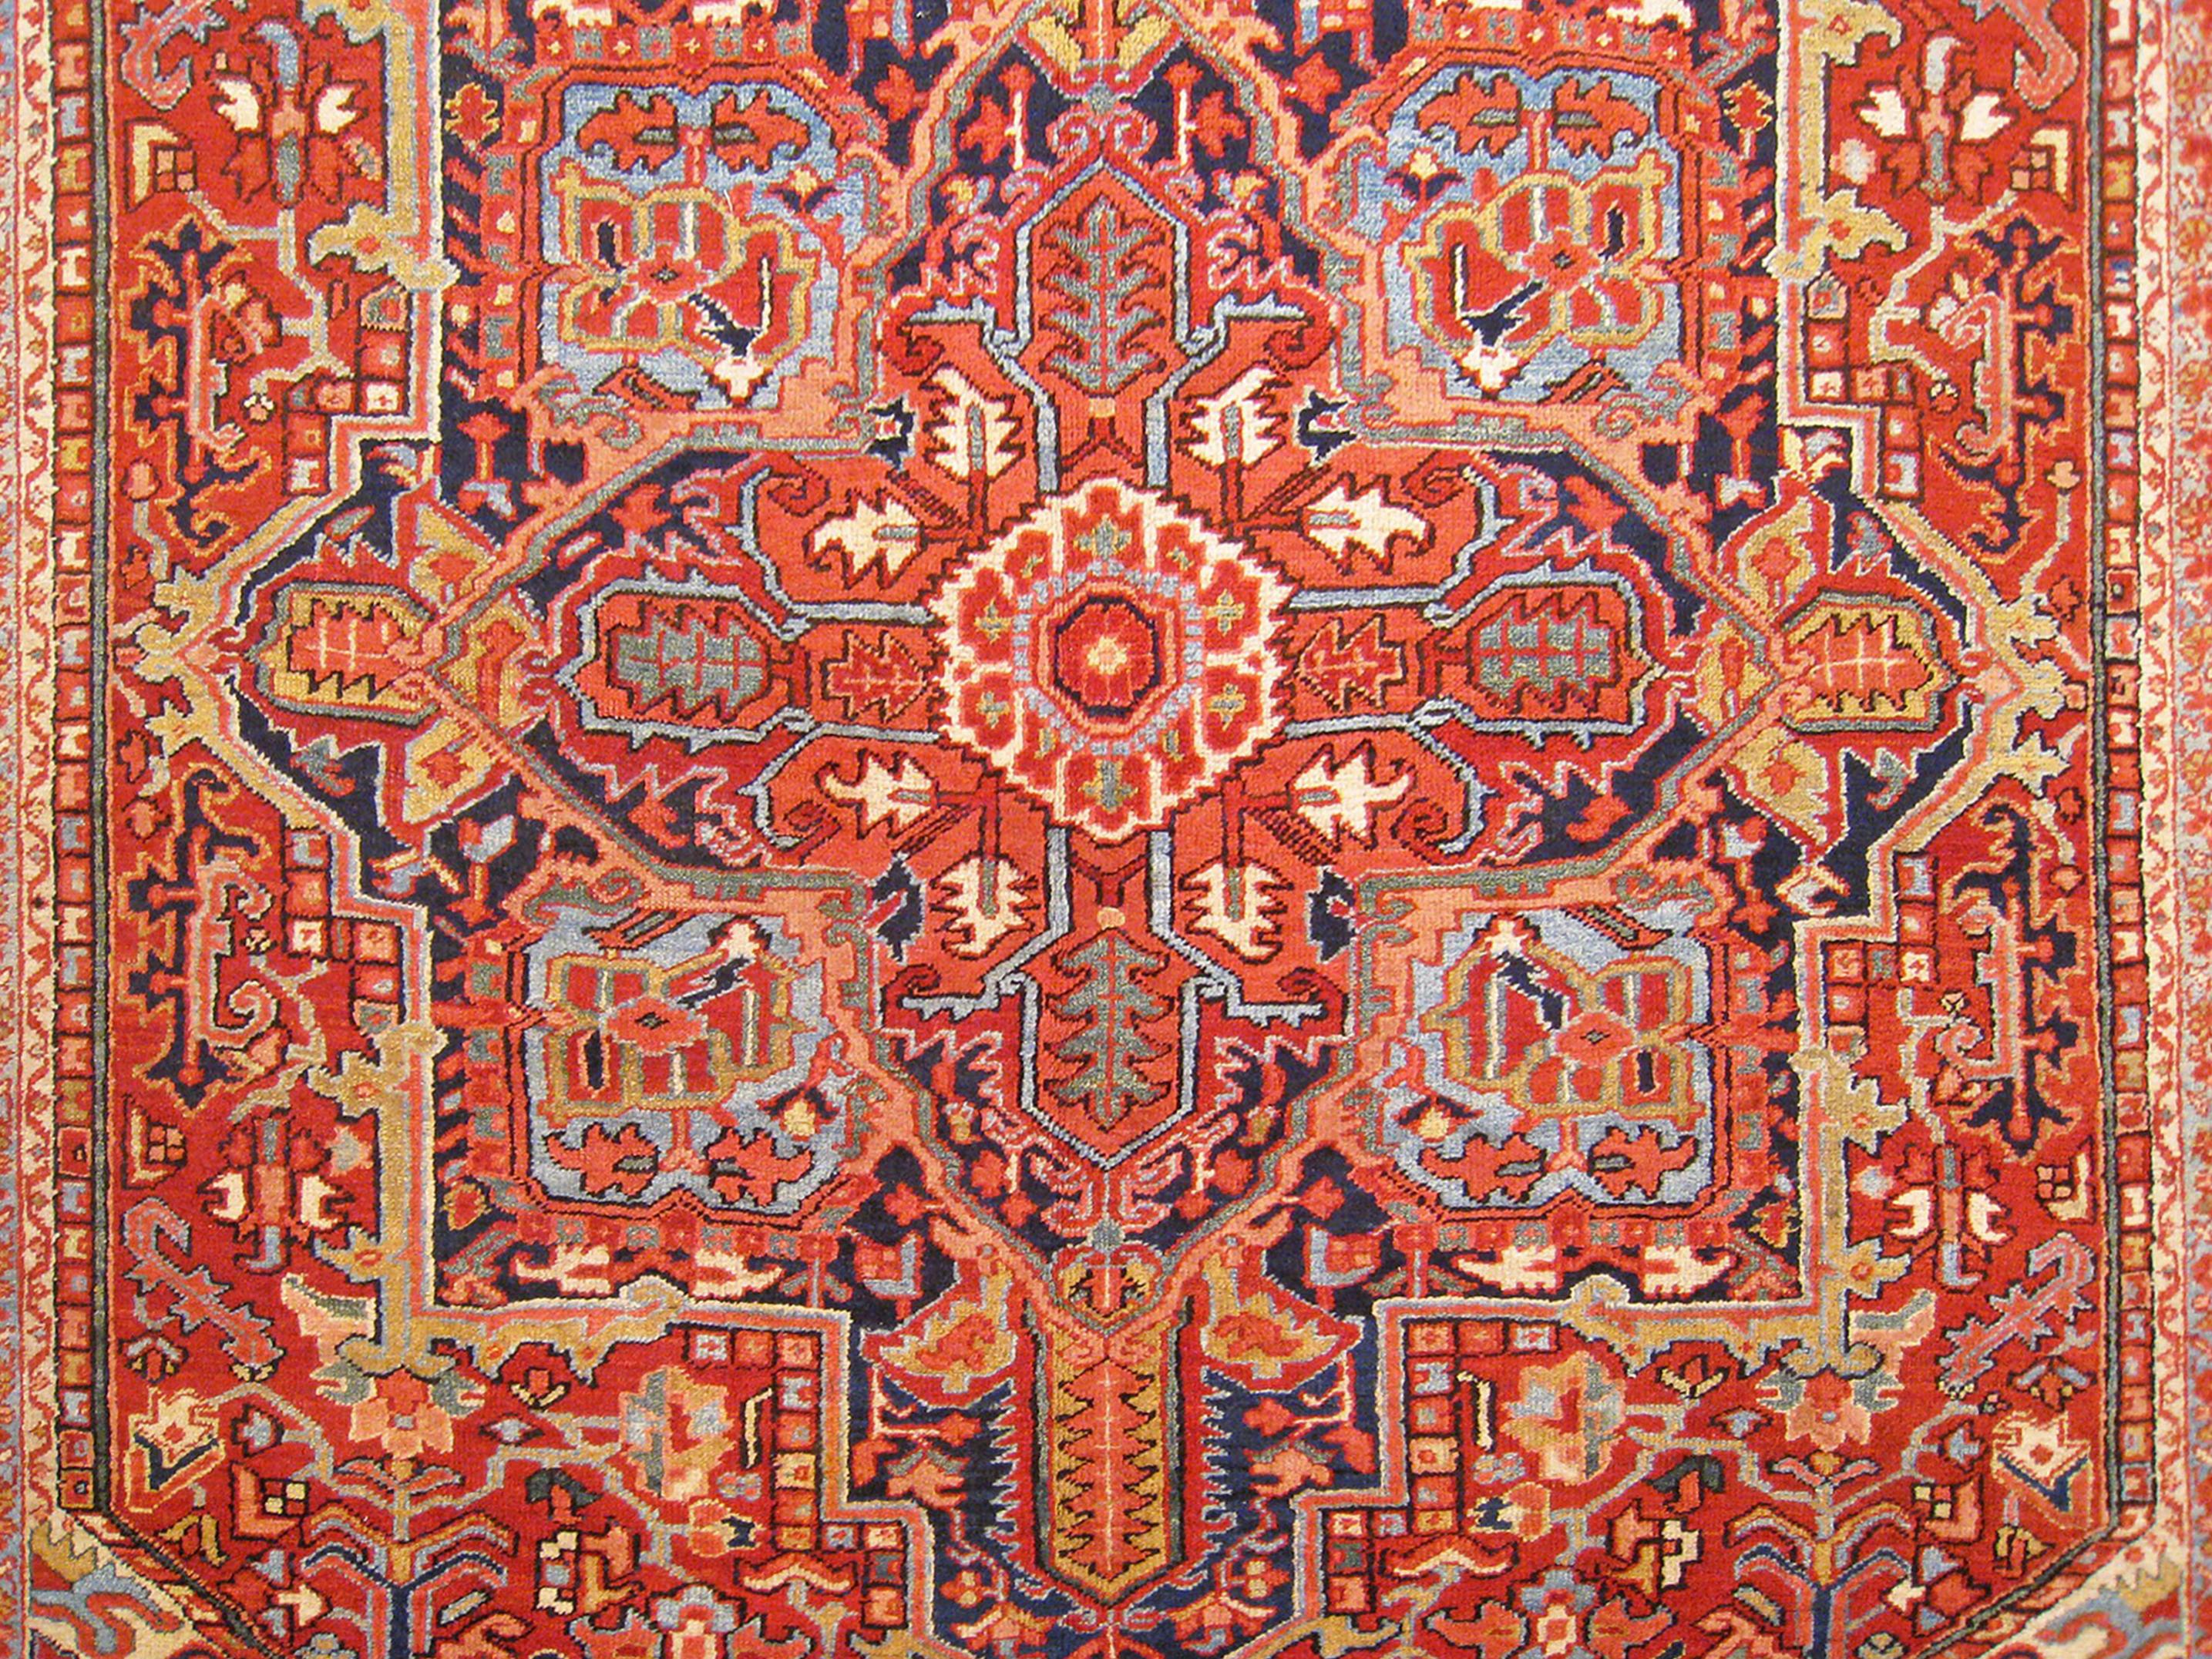 Wool Antique Persian Decorative Oriental Heriz Rug in Room Size For Sale